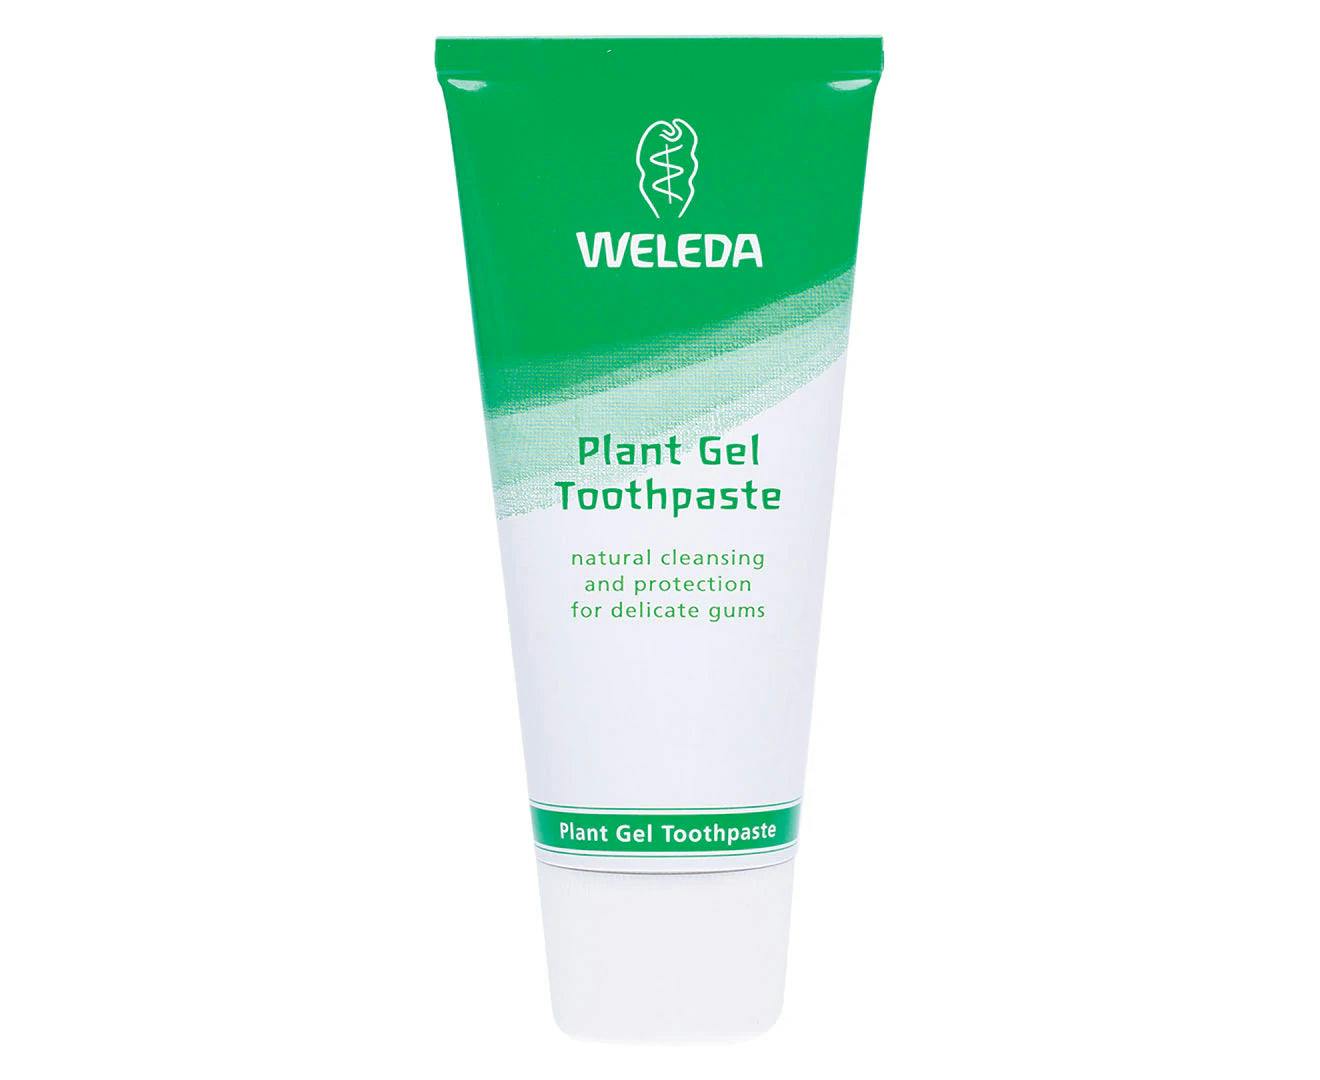 Weleda Toothpaste - Plant Gel 75ml